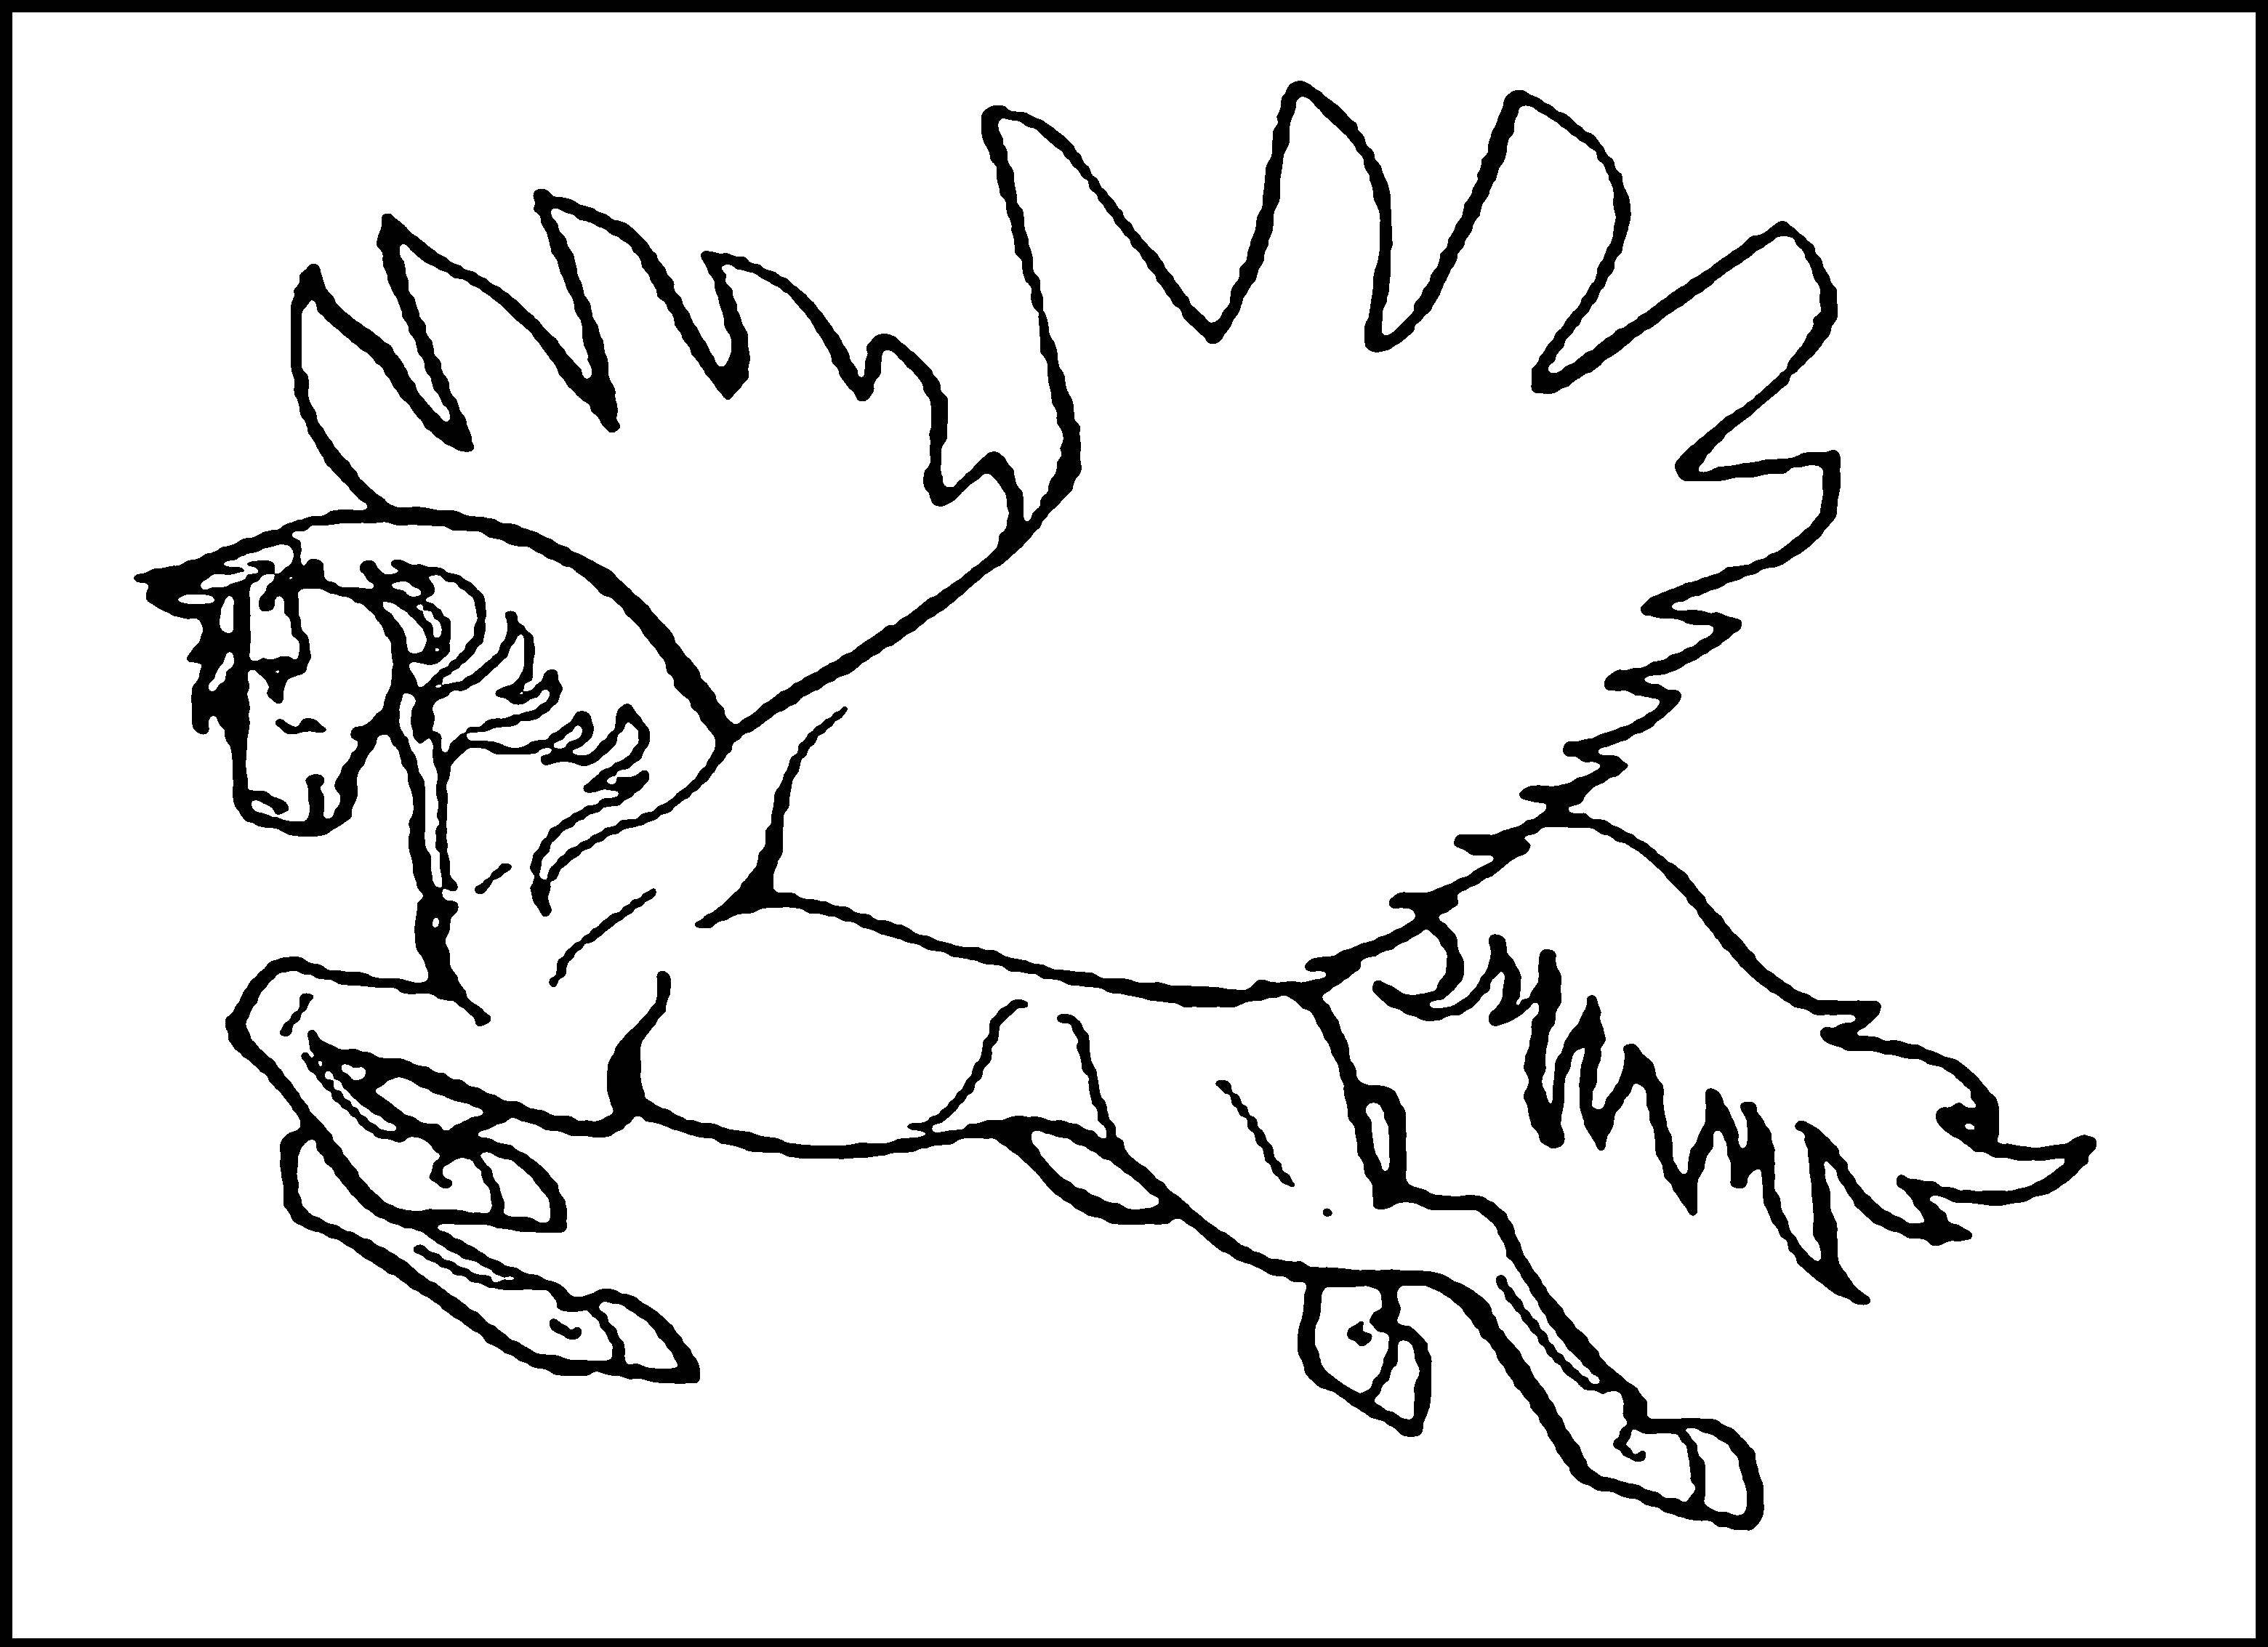 Coloring Wings and Pegasus. Category coloring. Tags:  Pegasus, wings.